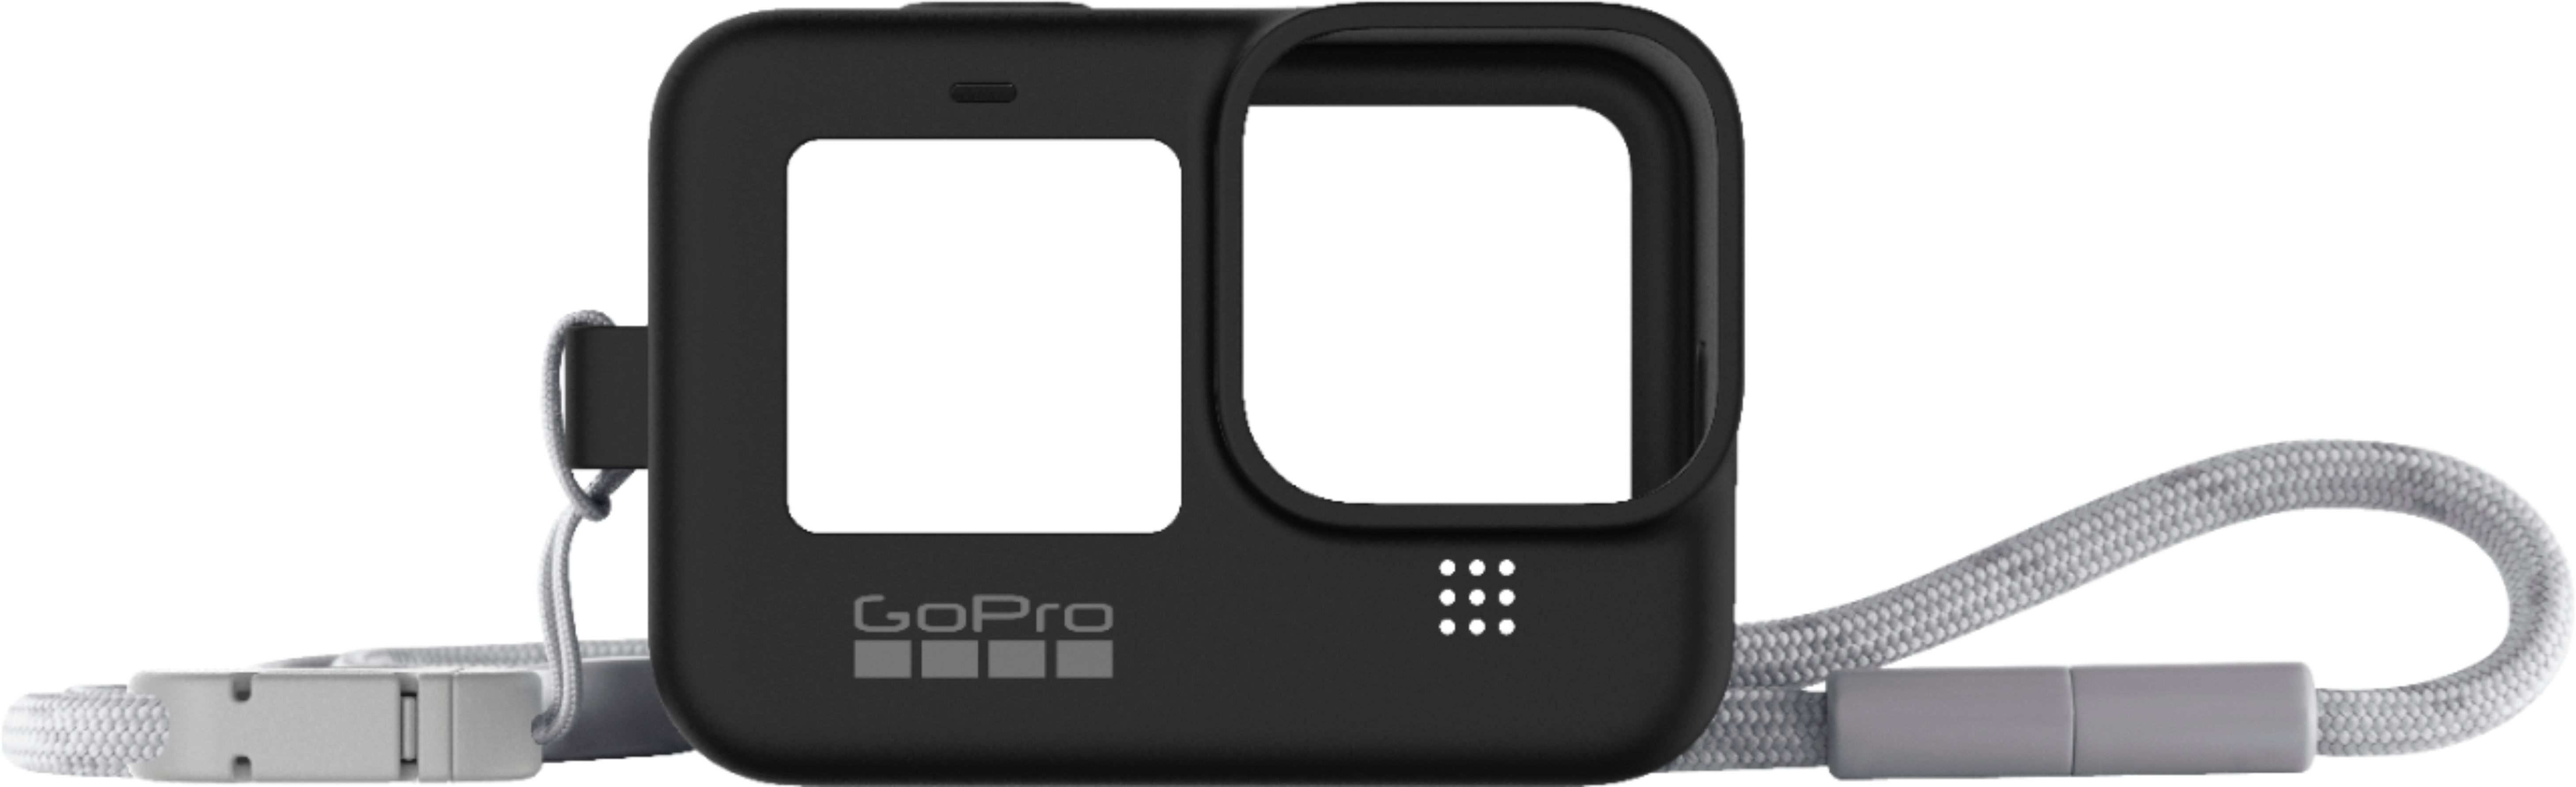 Housse de Protection Tuxsedo Americana GoPro - XSORIES - TXSD3A803 